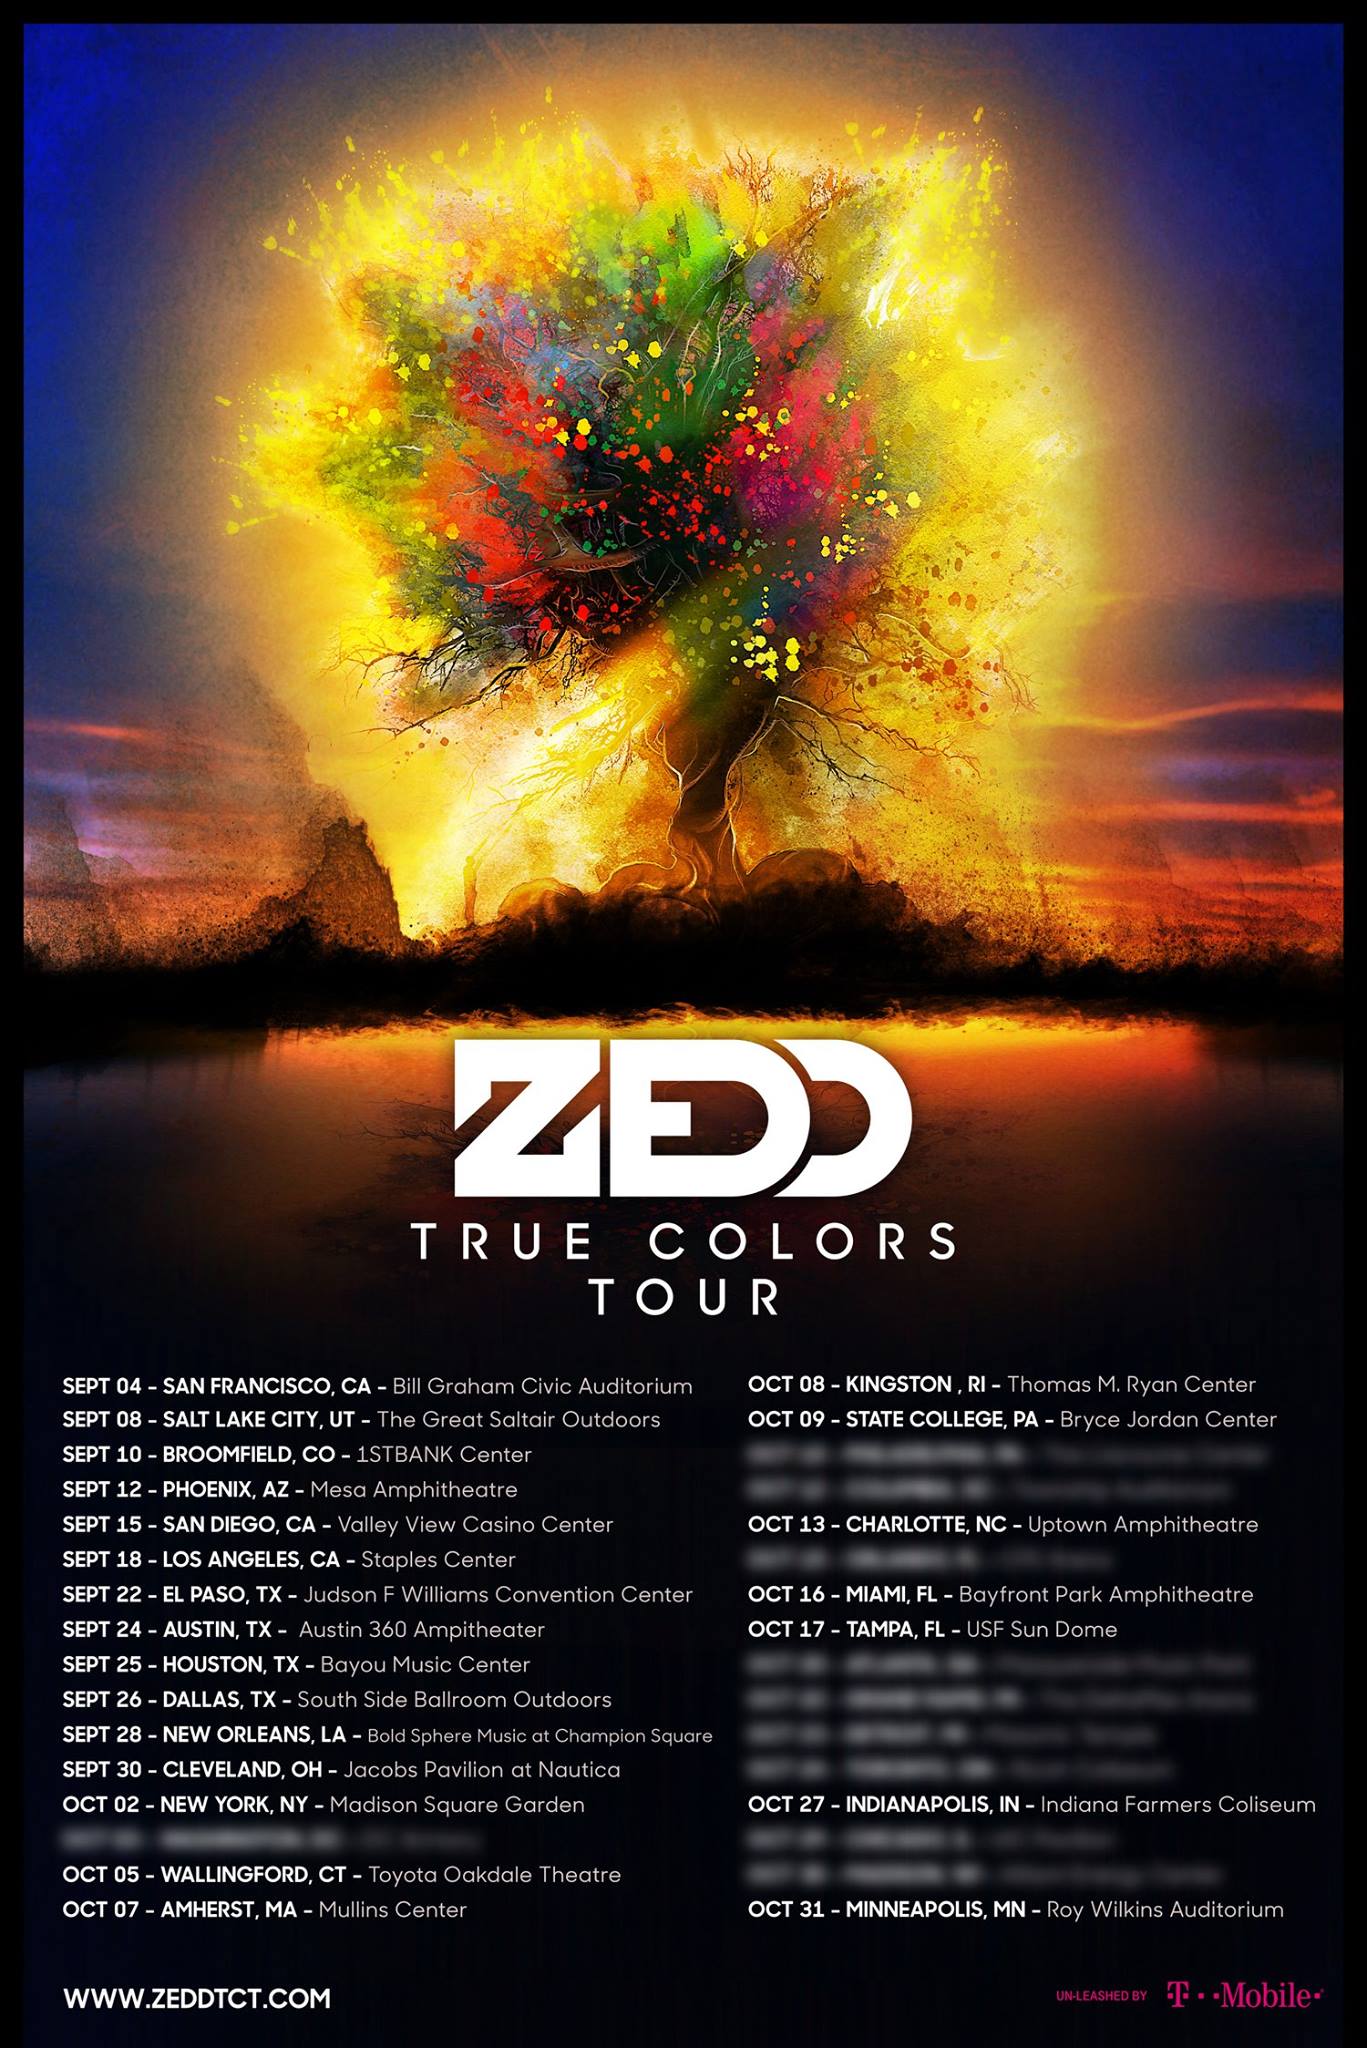 zedd tour dates